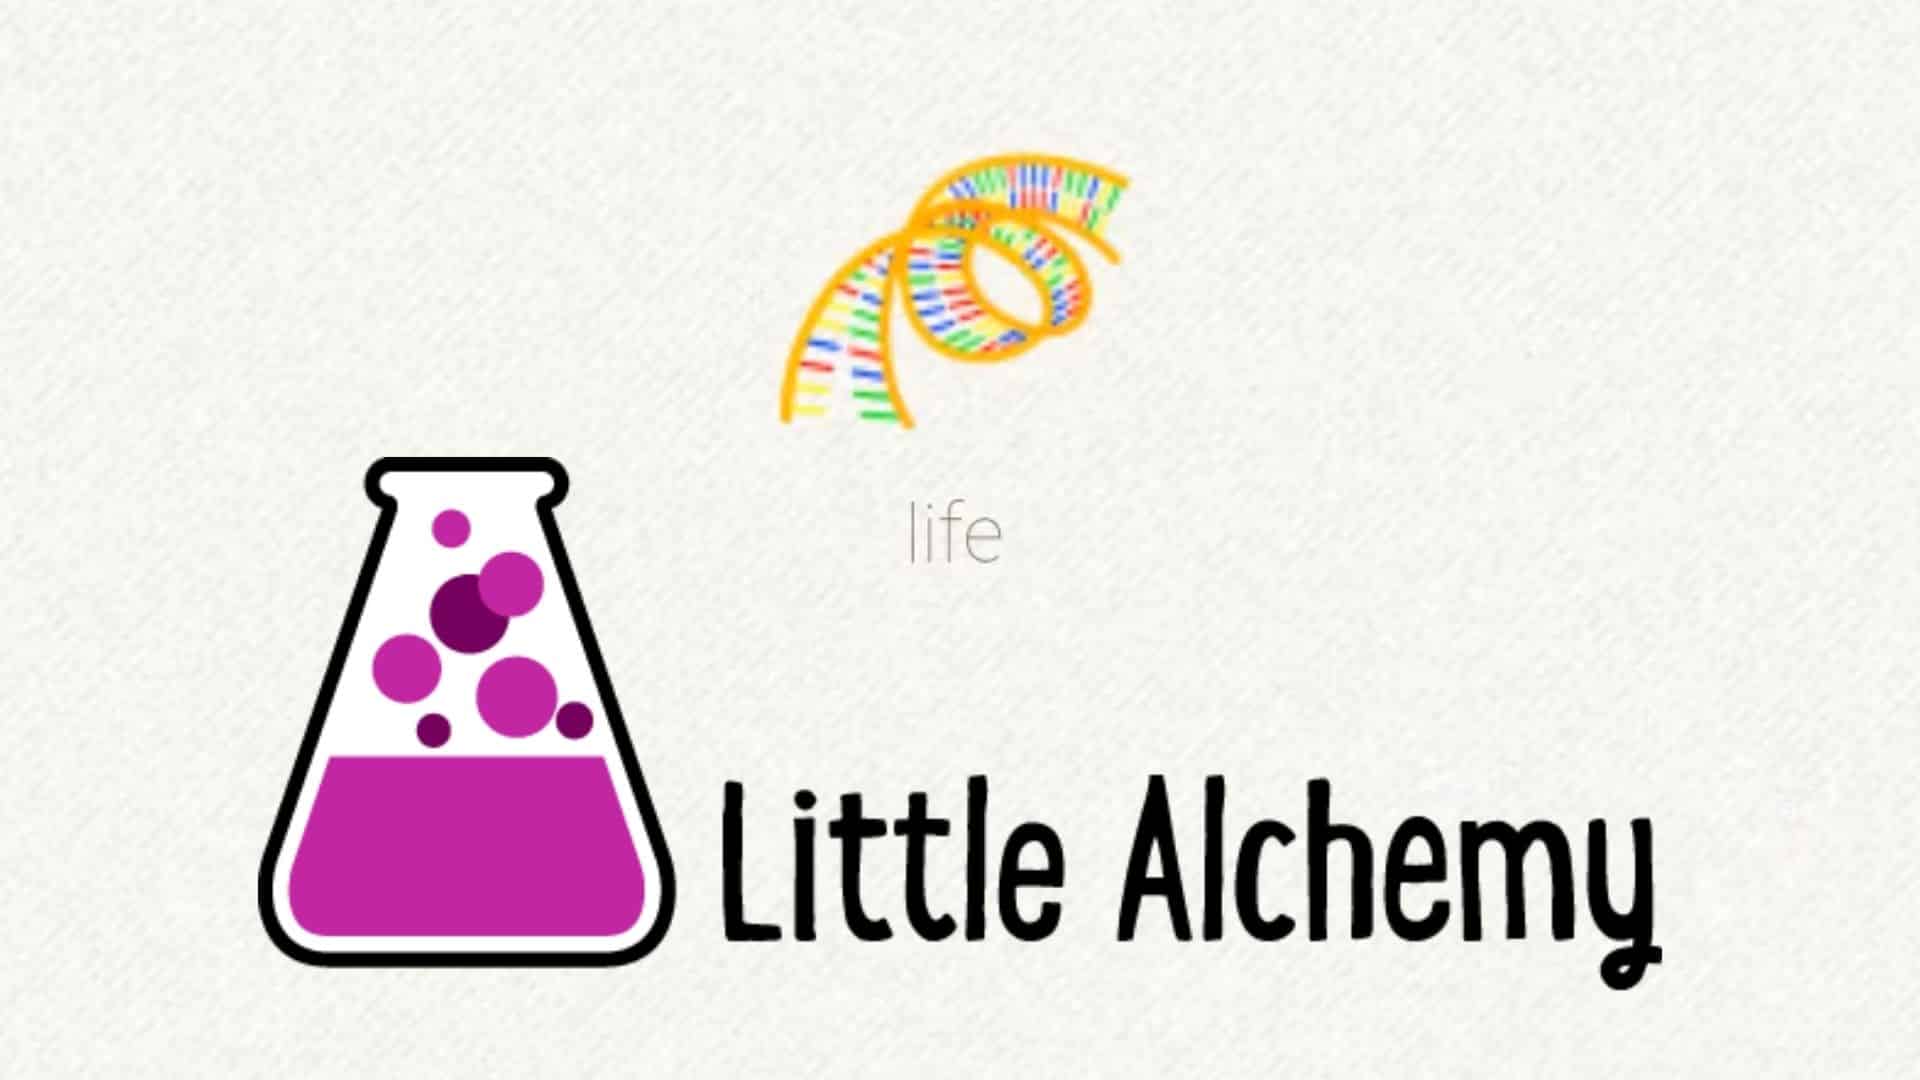 little alchemy life element